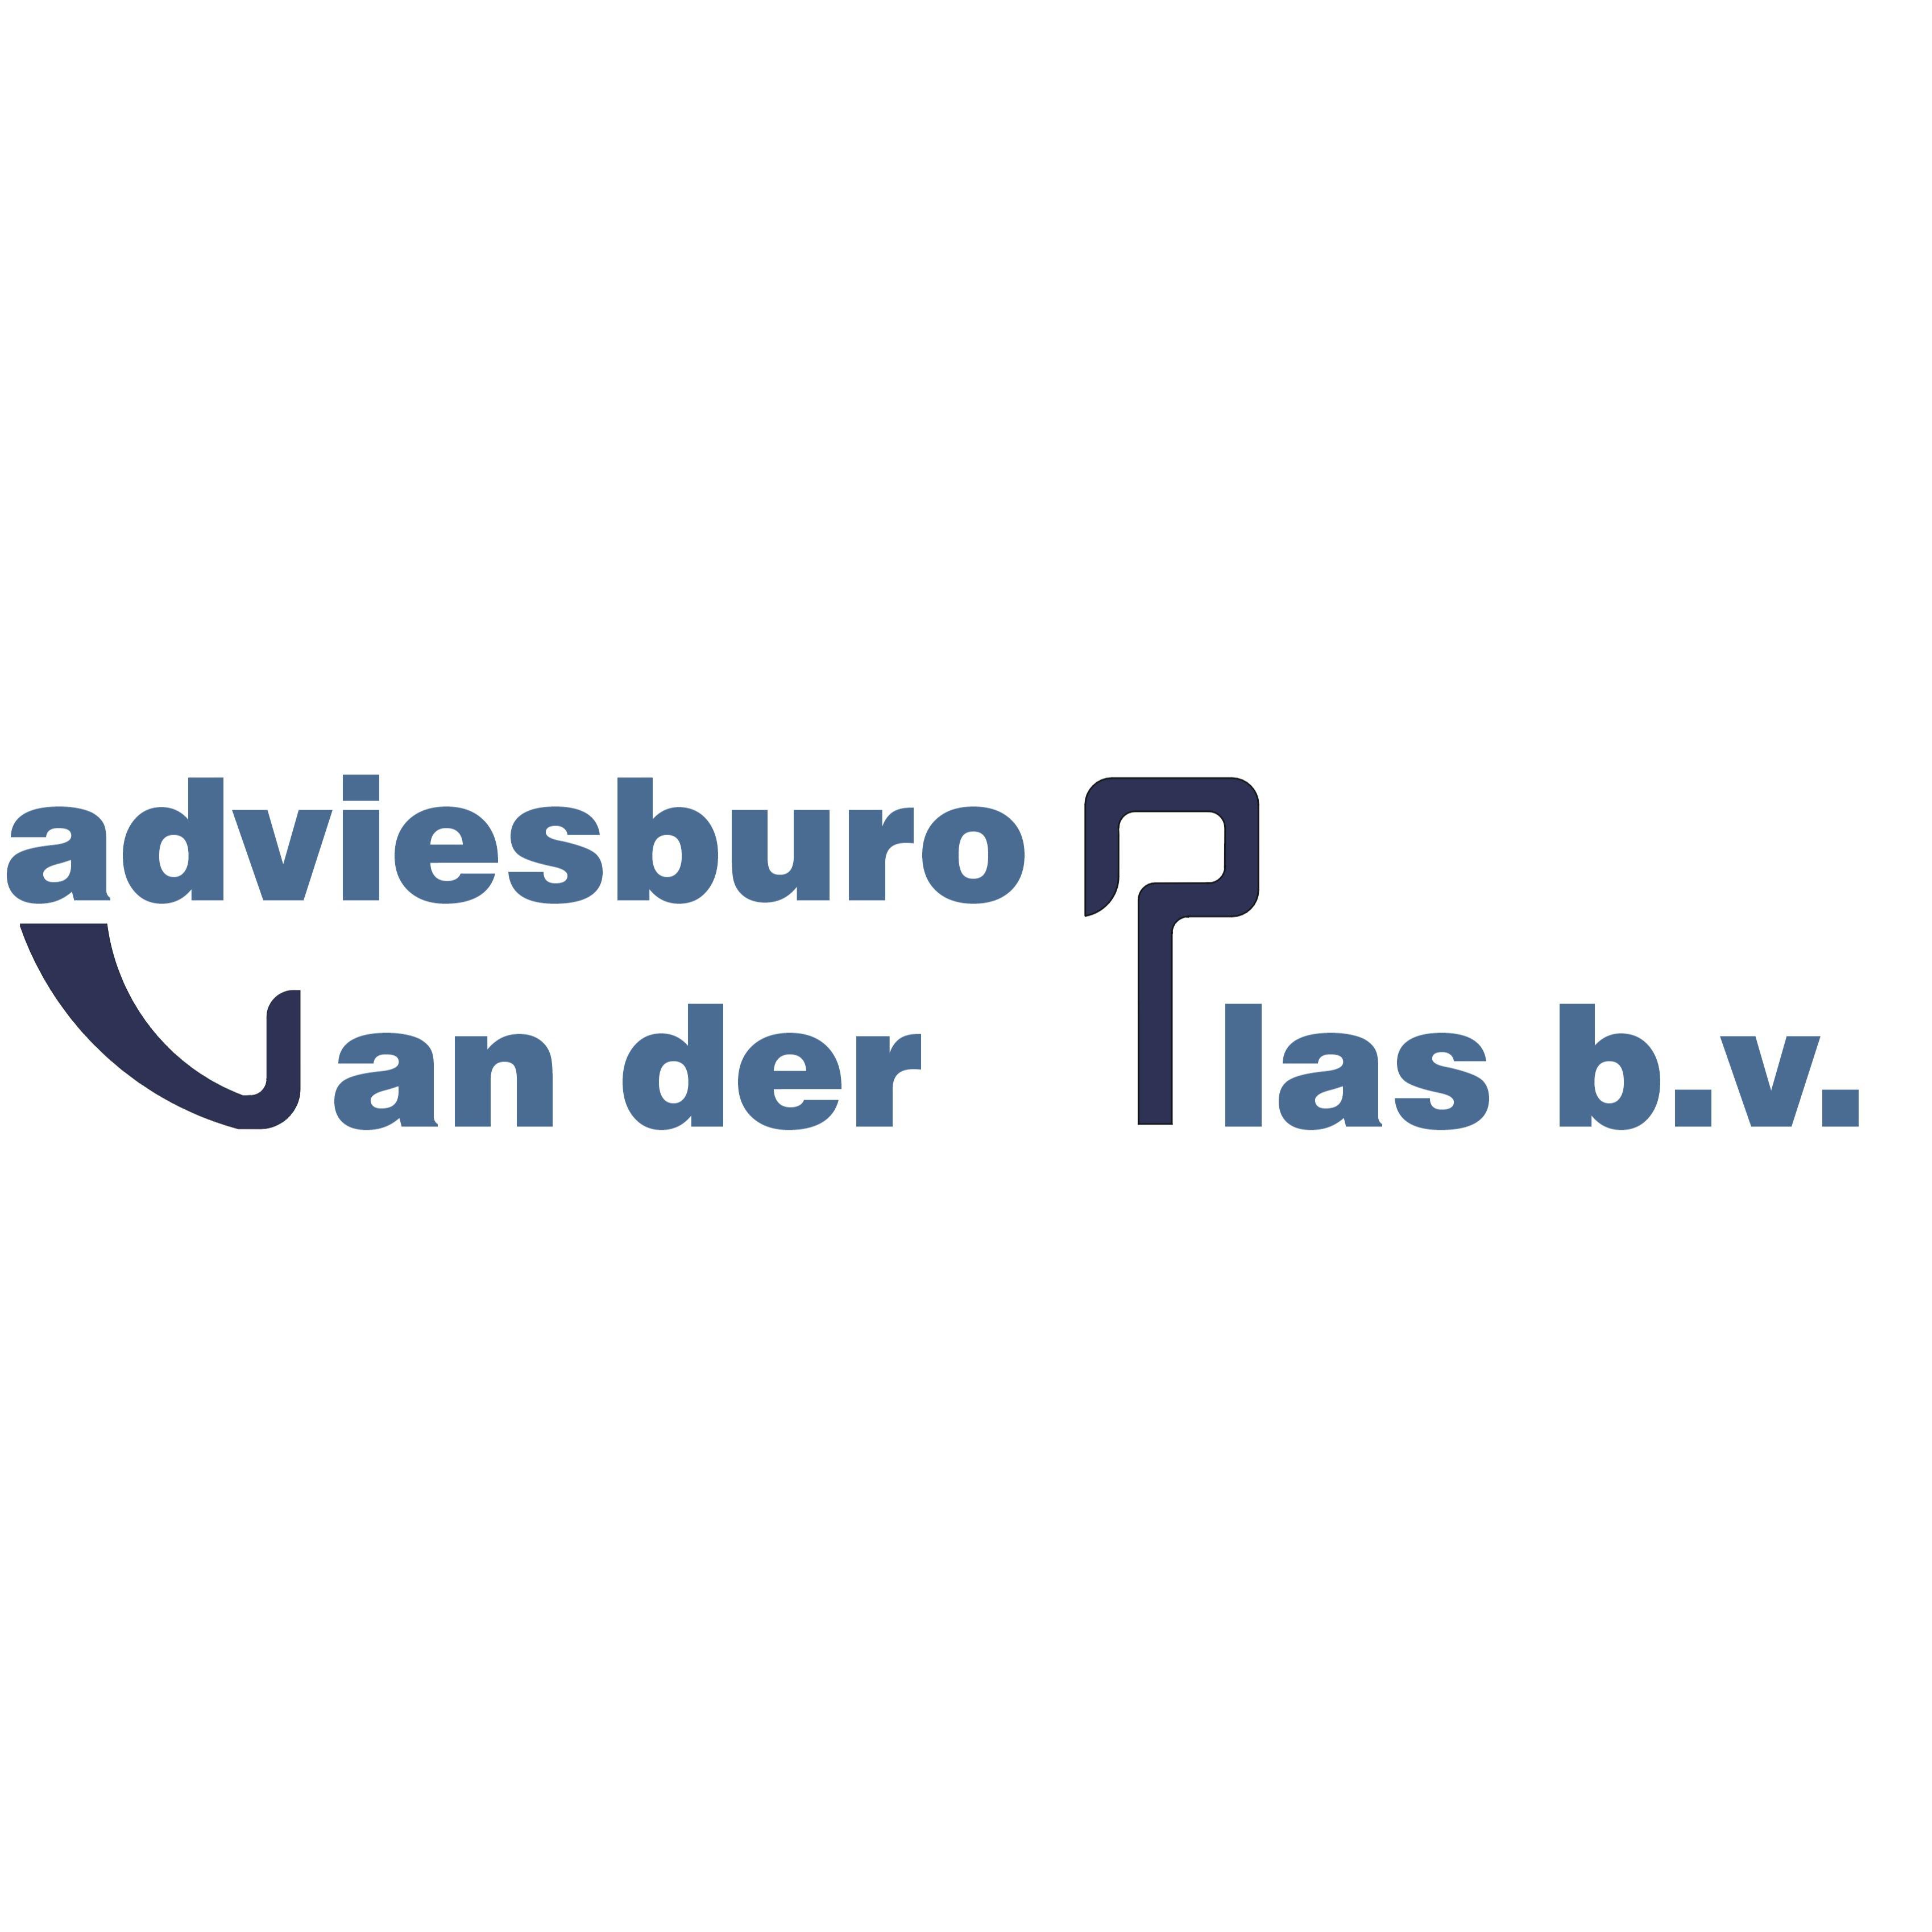 Adviesburo Van der Plas BV Logo